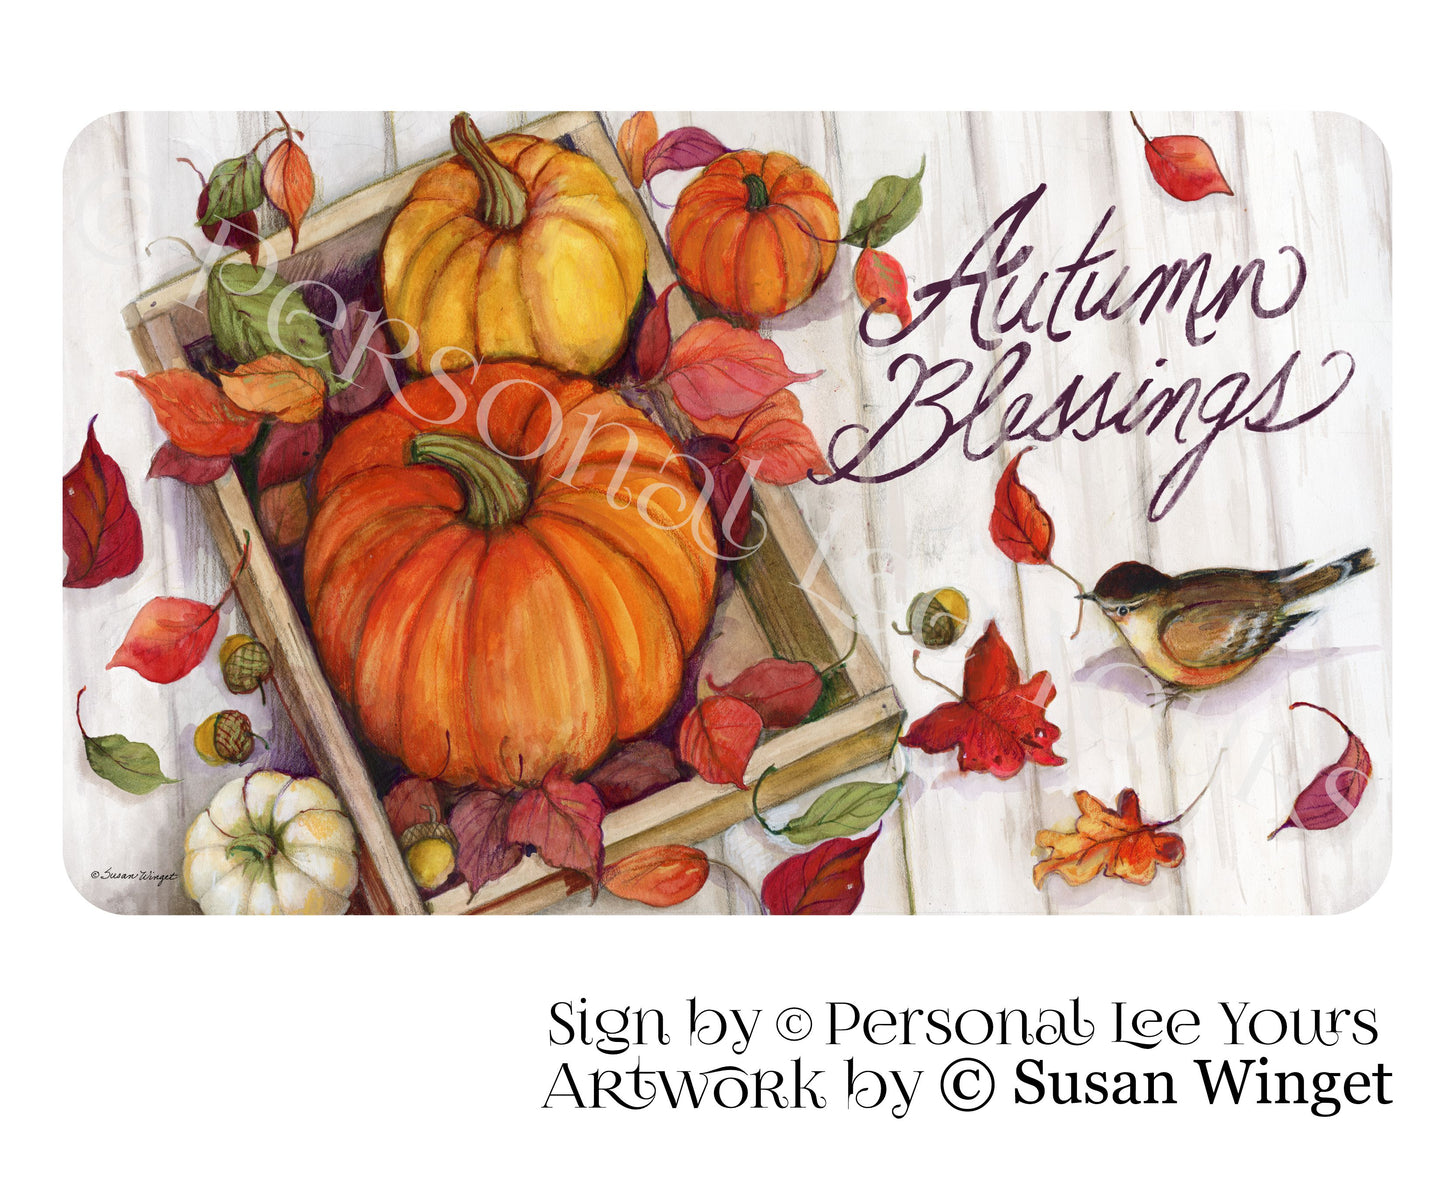 Susan Winget Exclusive Sign * Pumpkin Box * Horizontal * 3 Sizes * Lightweight Metal